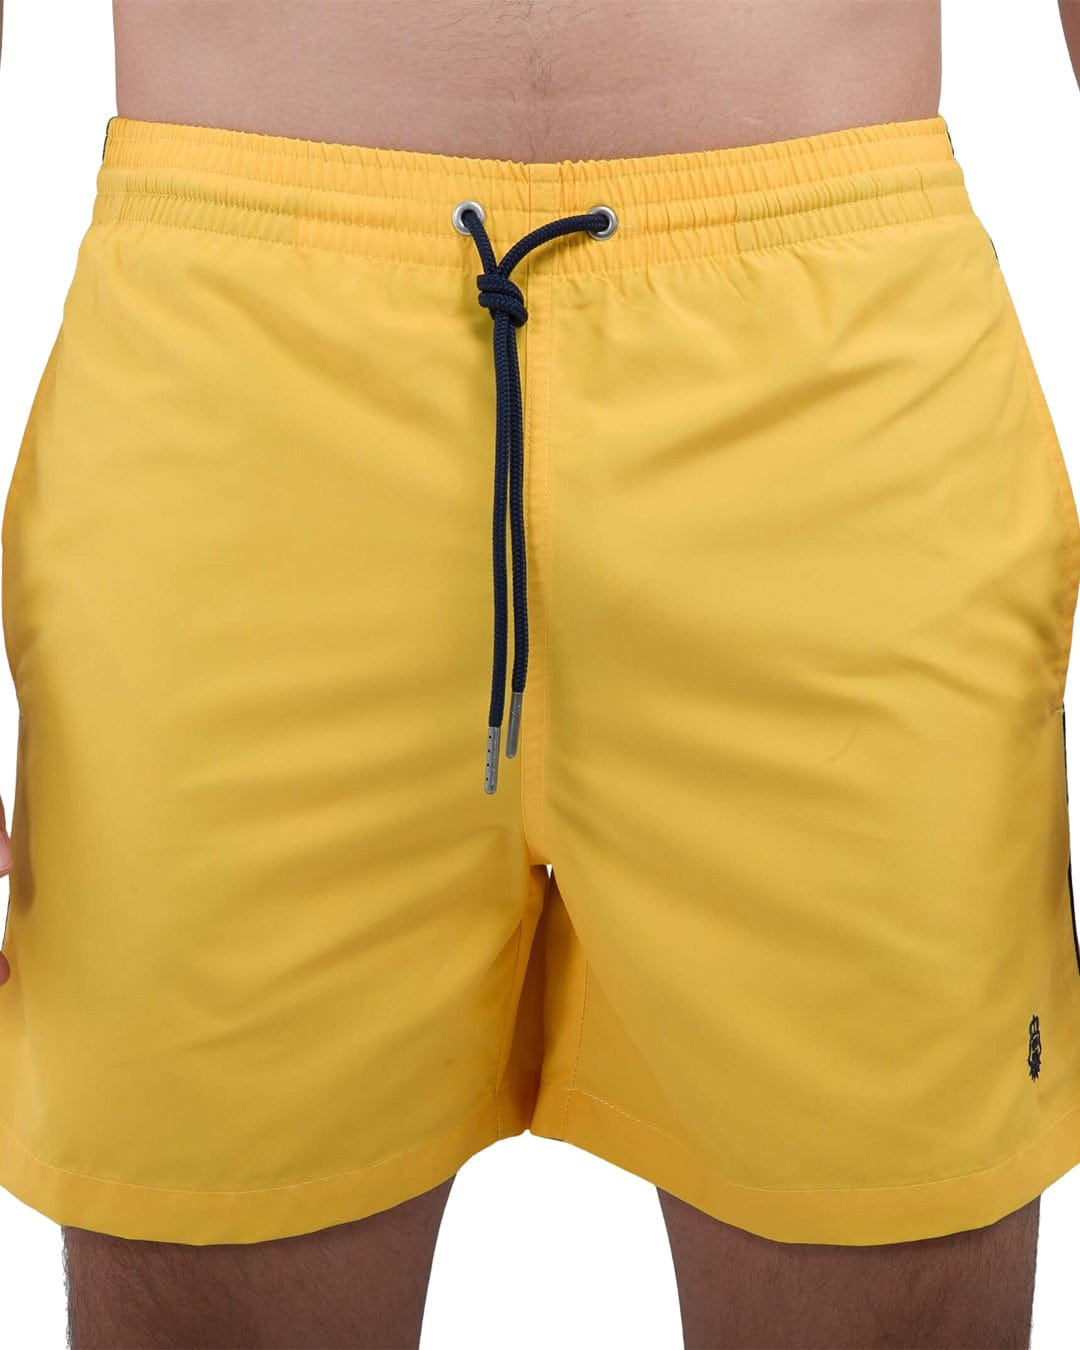 Yellow Piped Swim Shorts